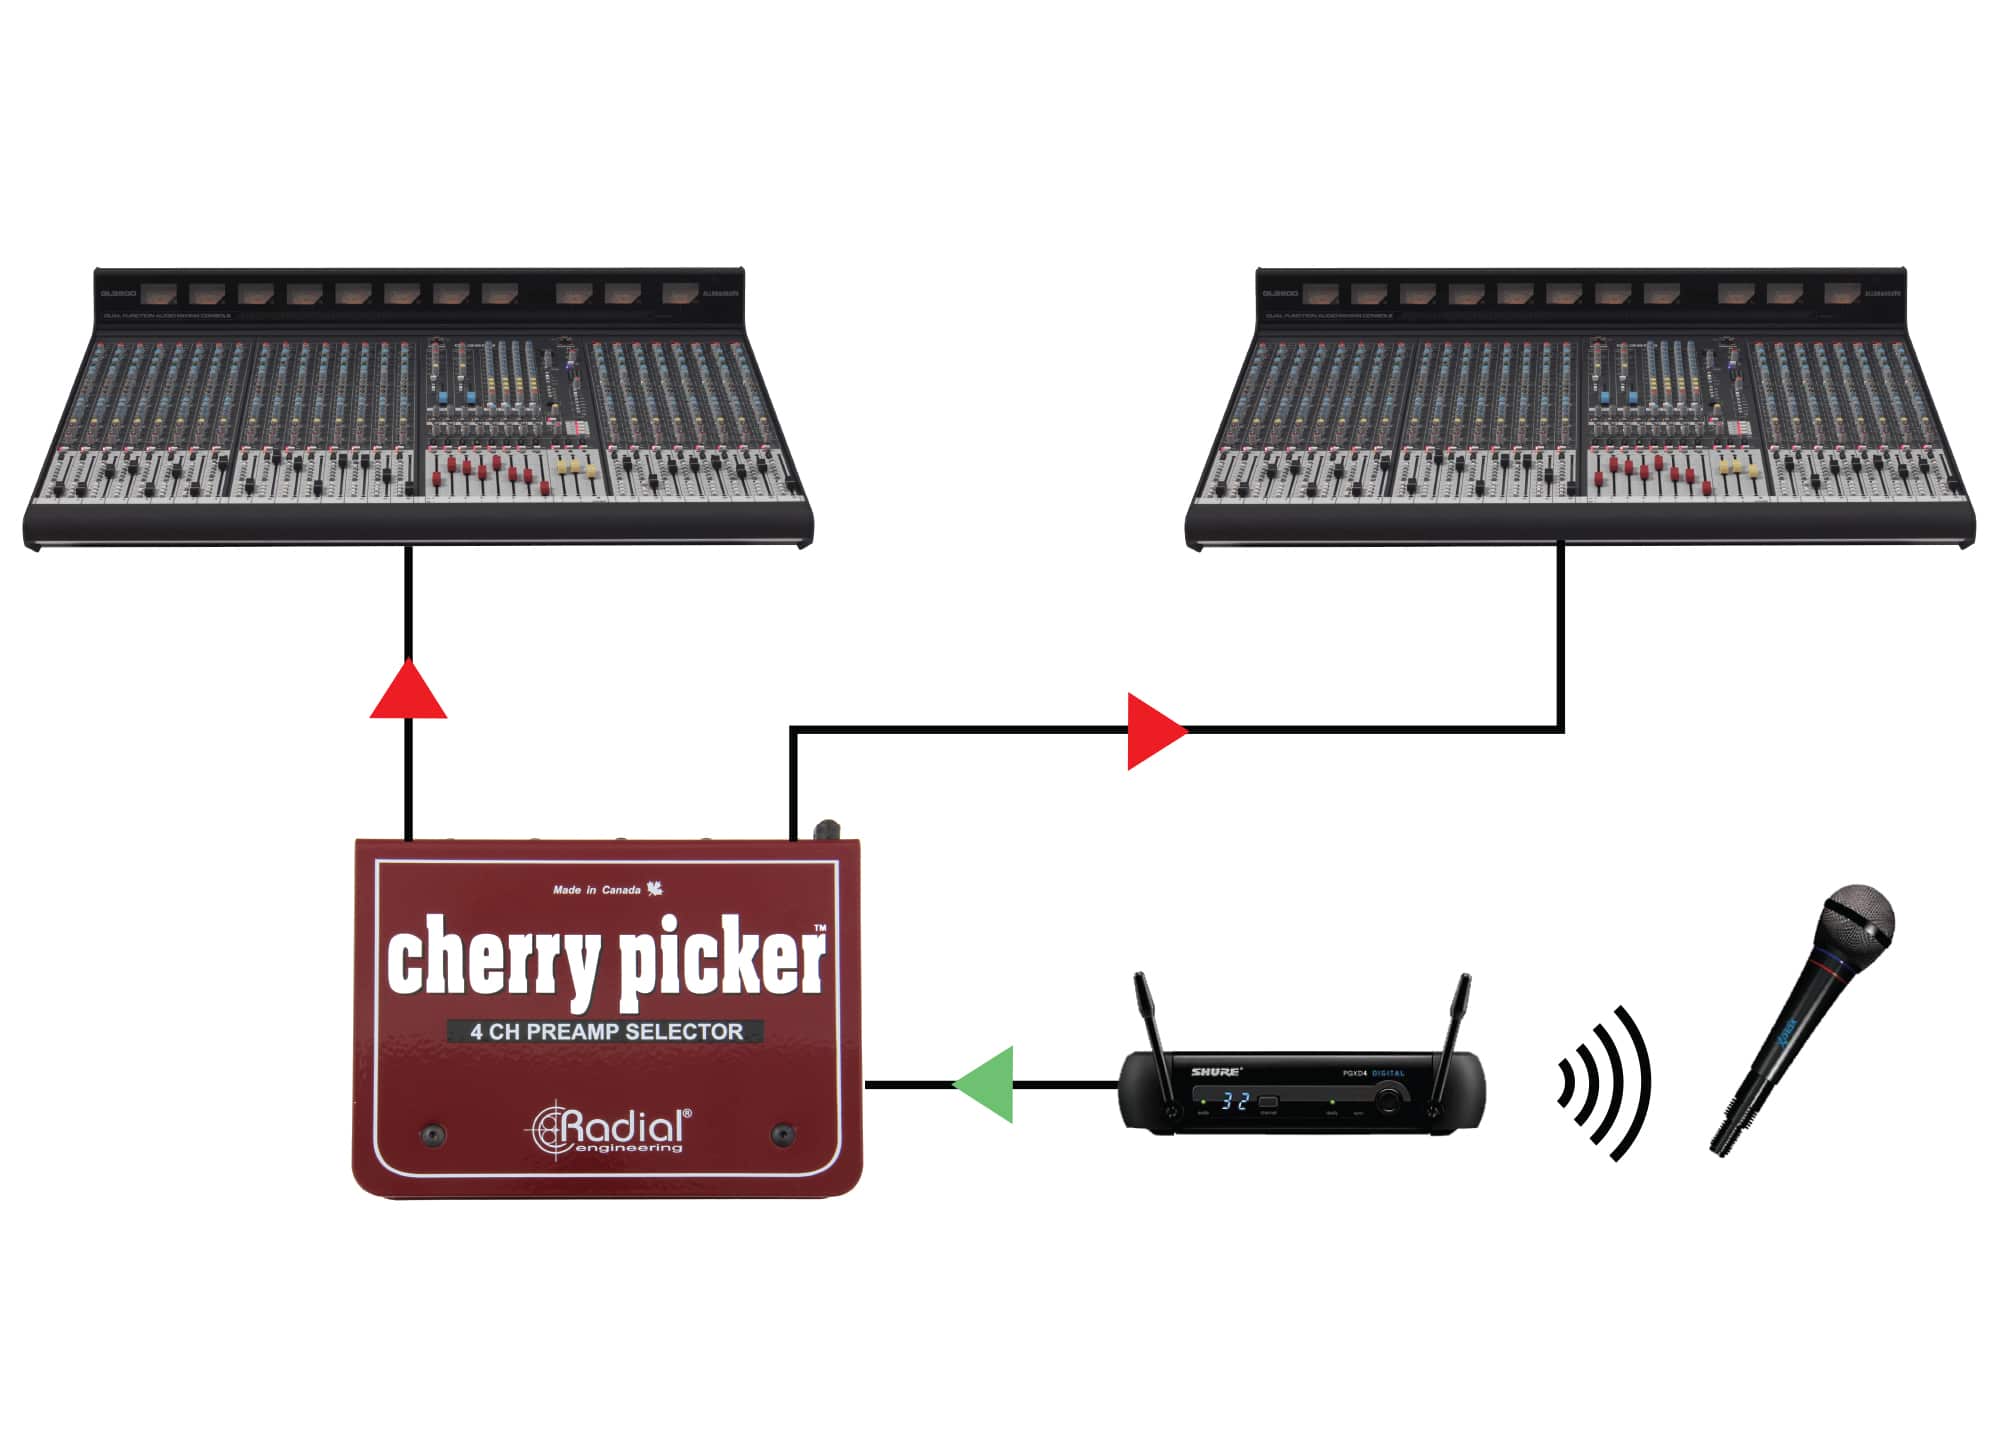 Cherry picker application image